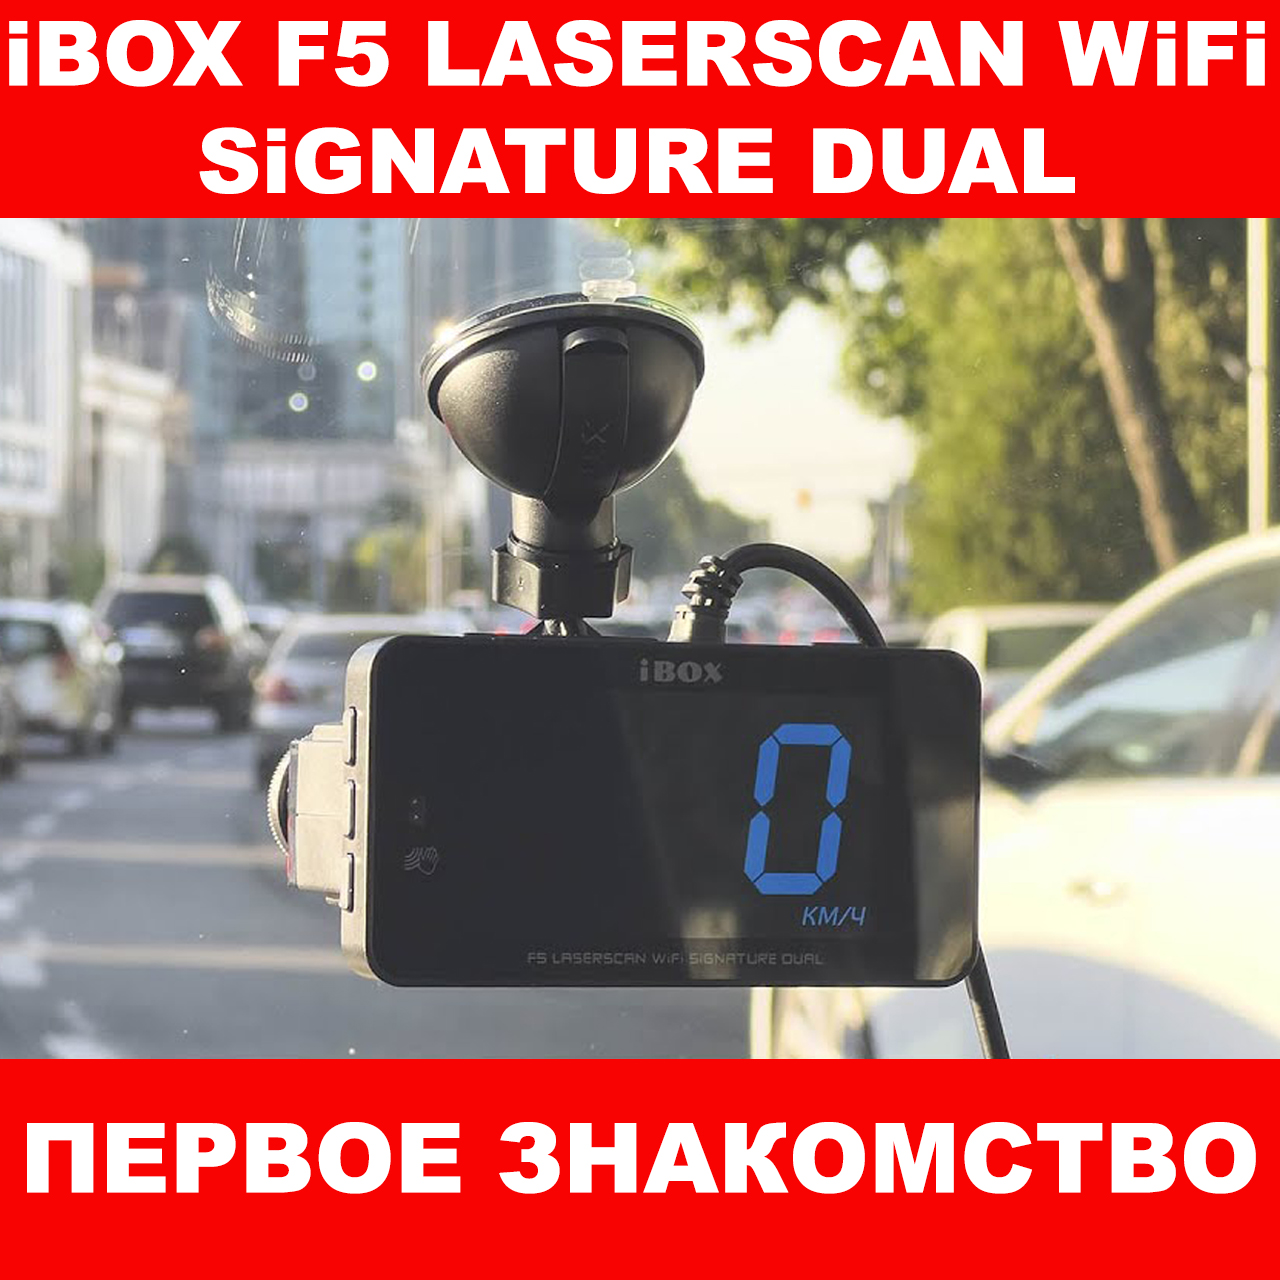 iBOX F5 LaserScan WiFi Signature Dual. Первое знакомство